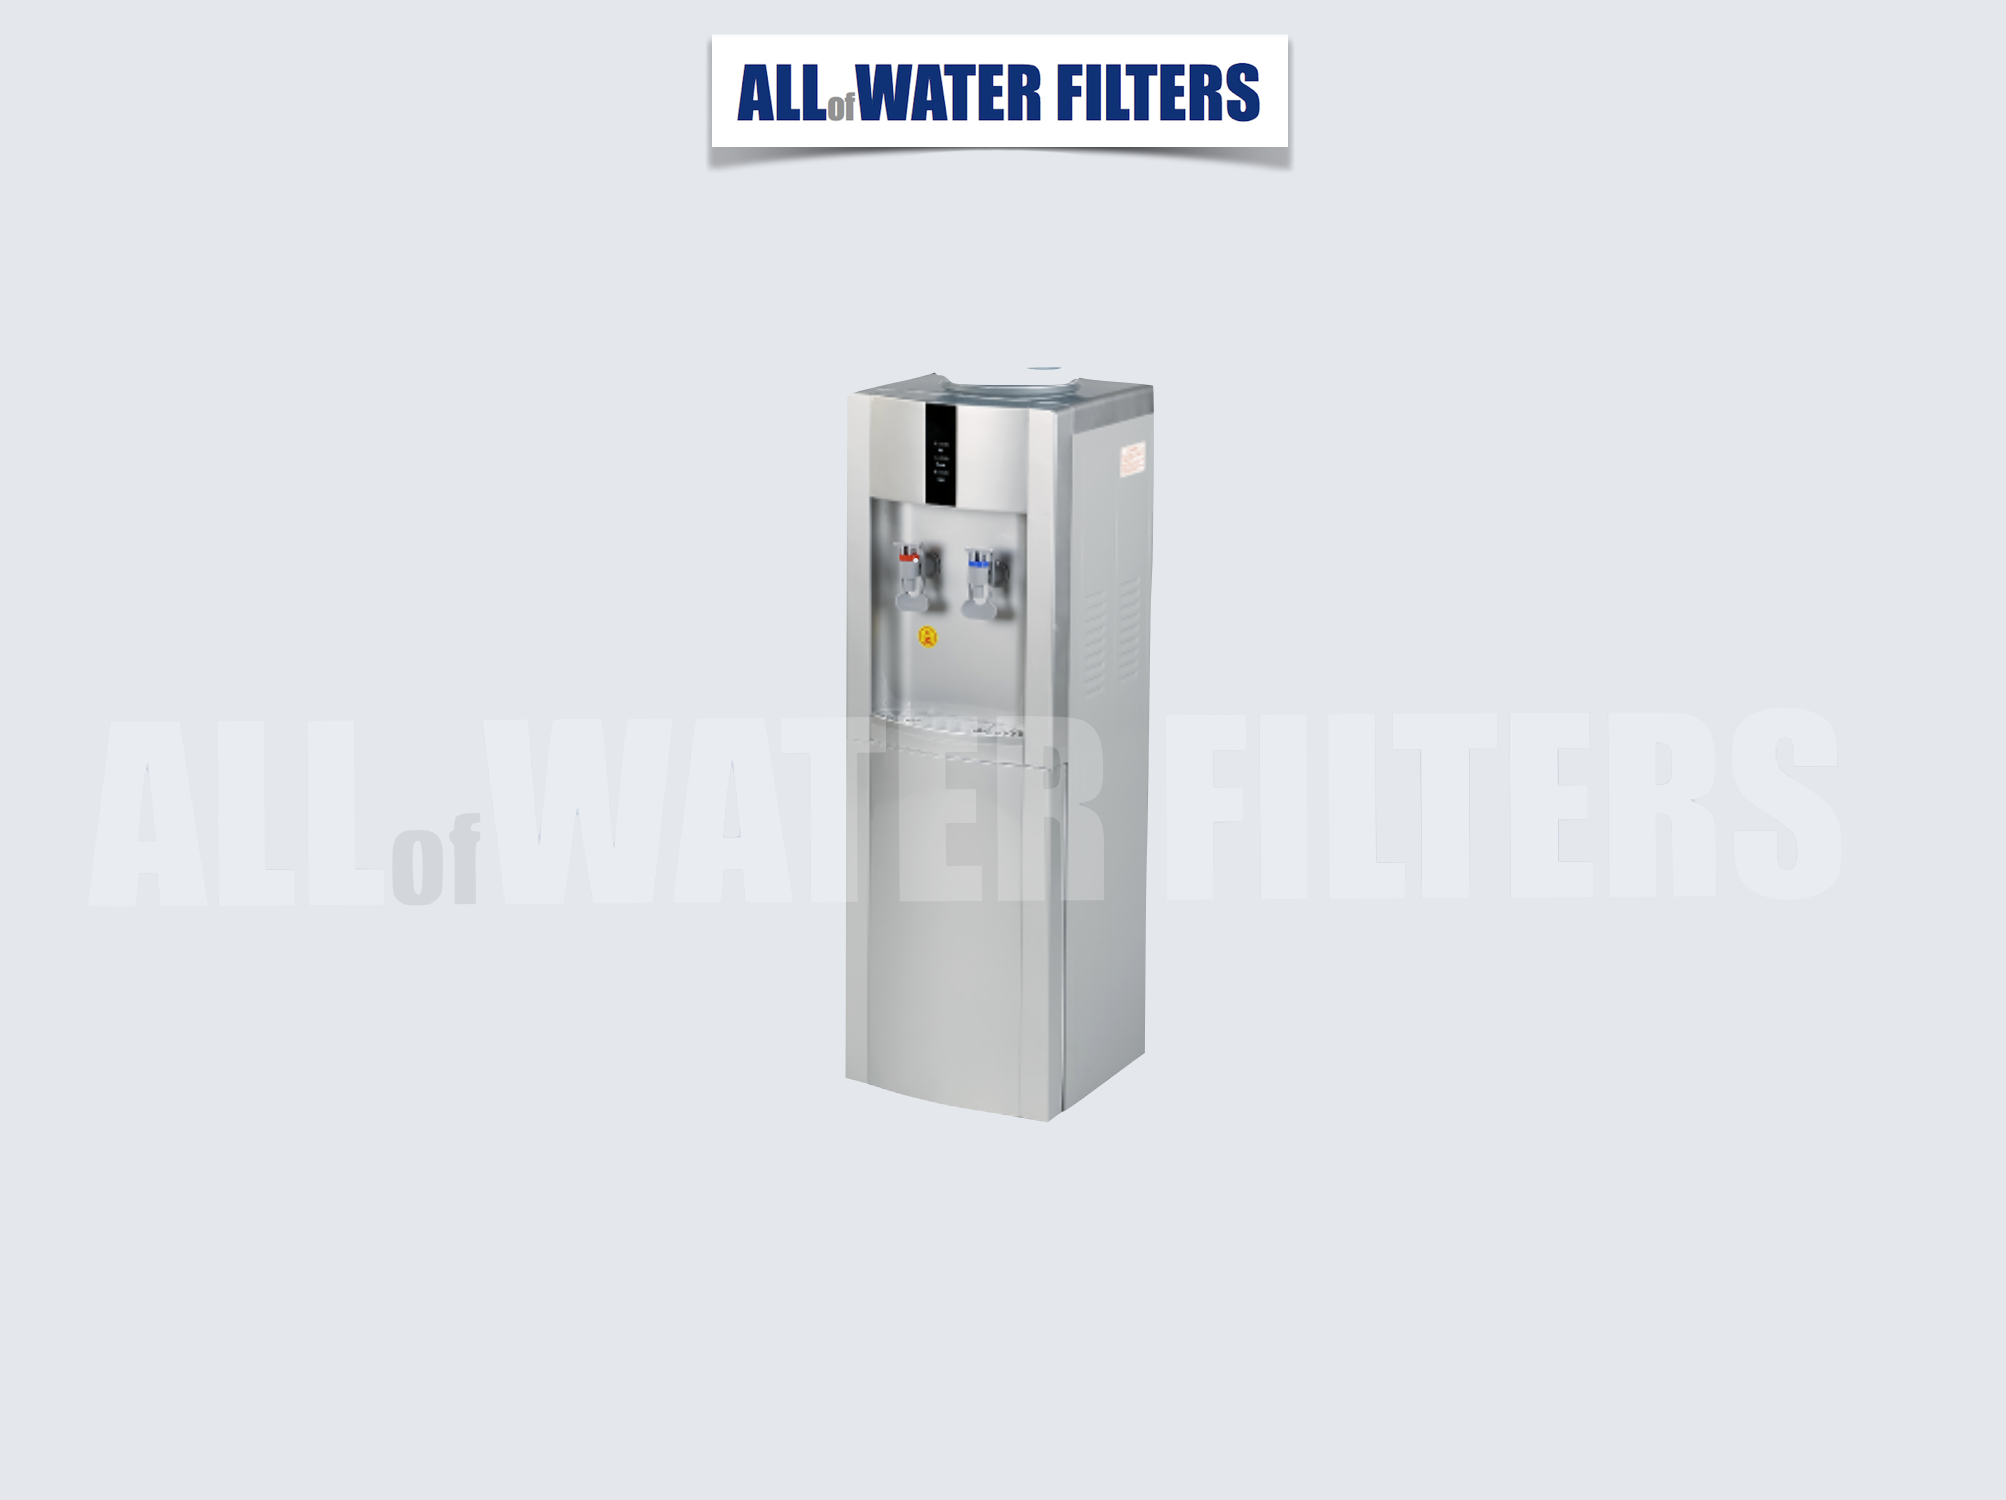 dispenser-bhi-with-cooler-box-silver